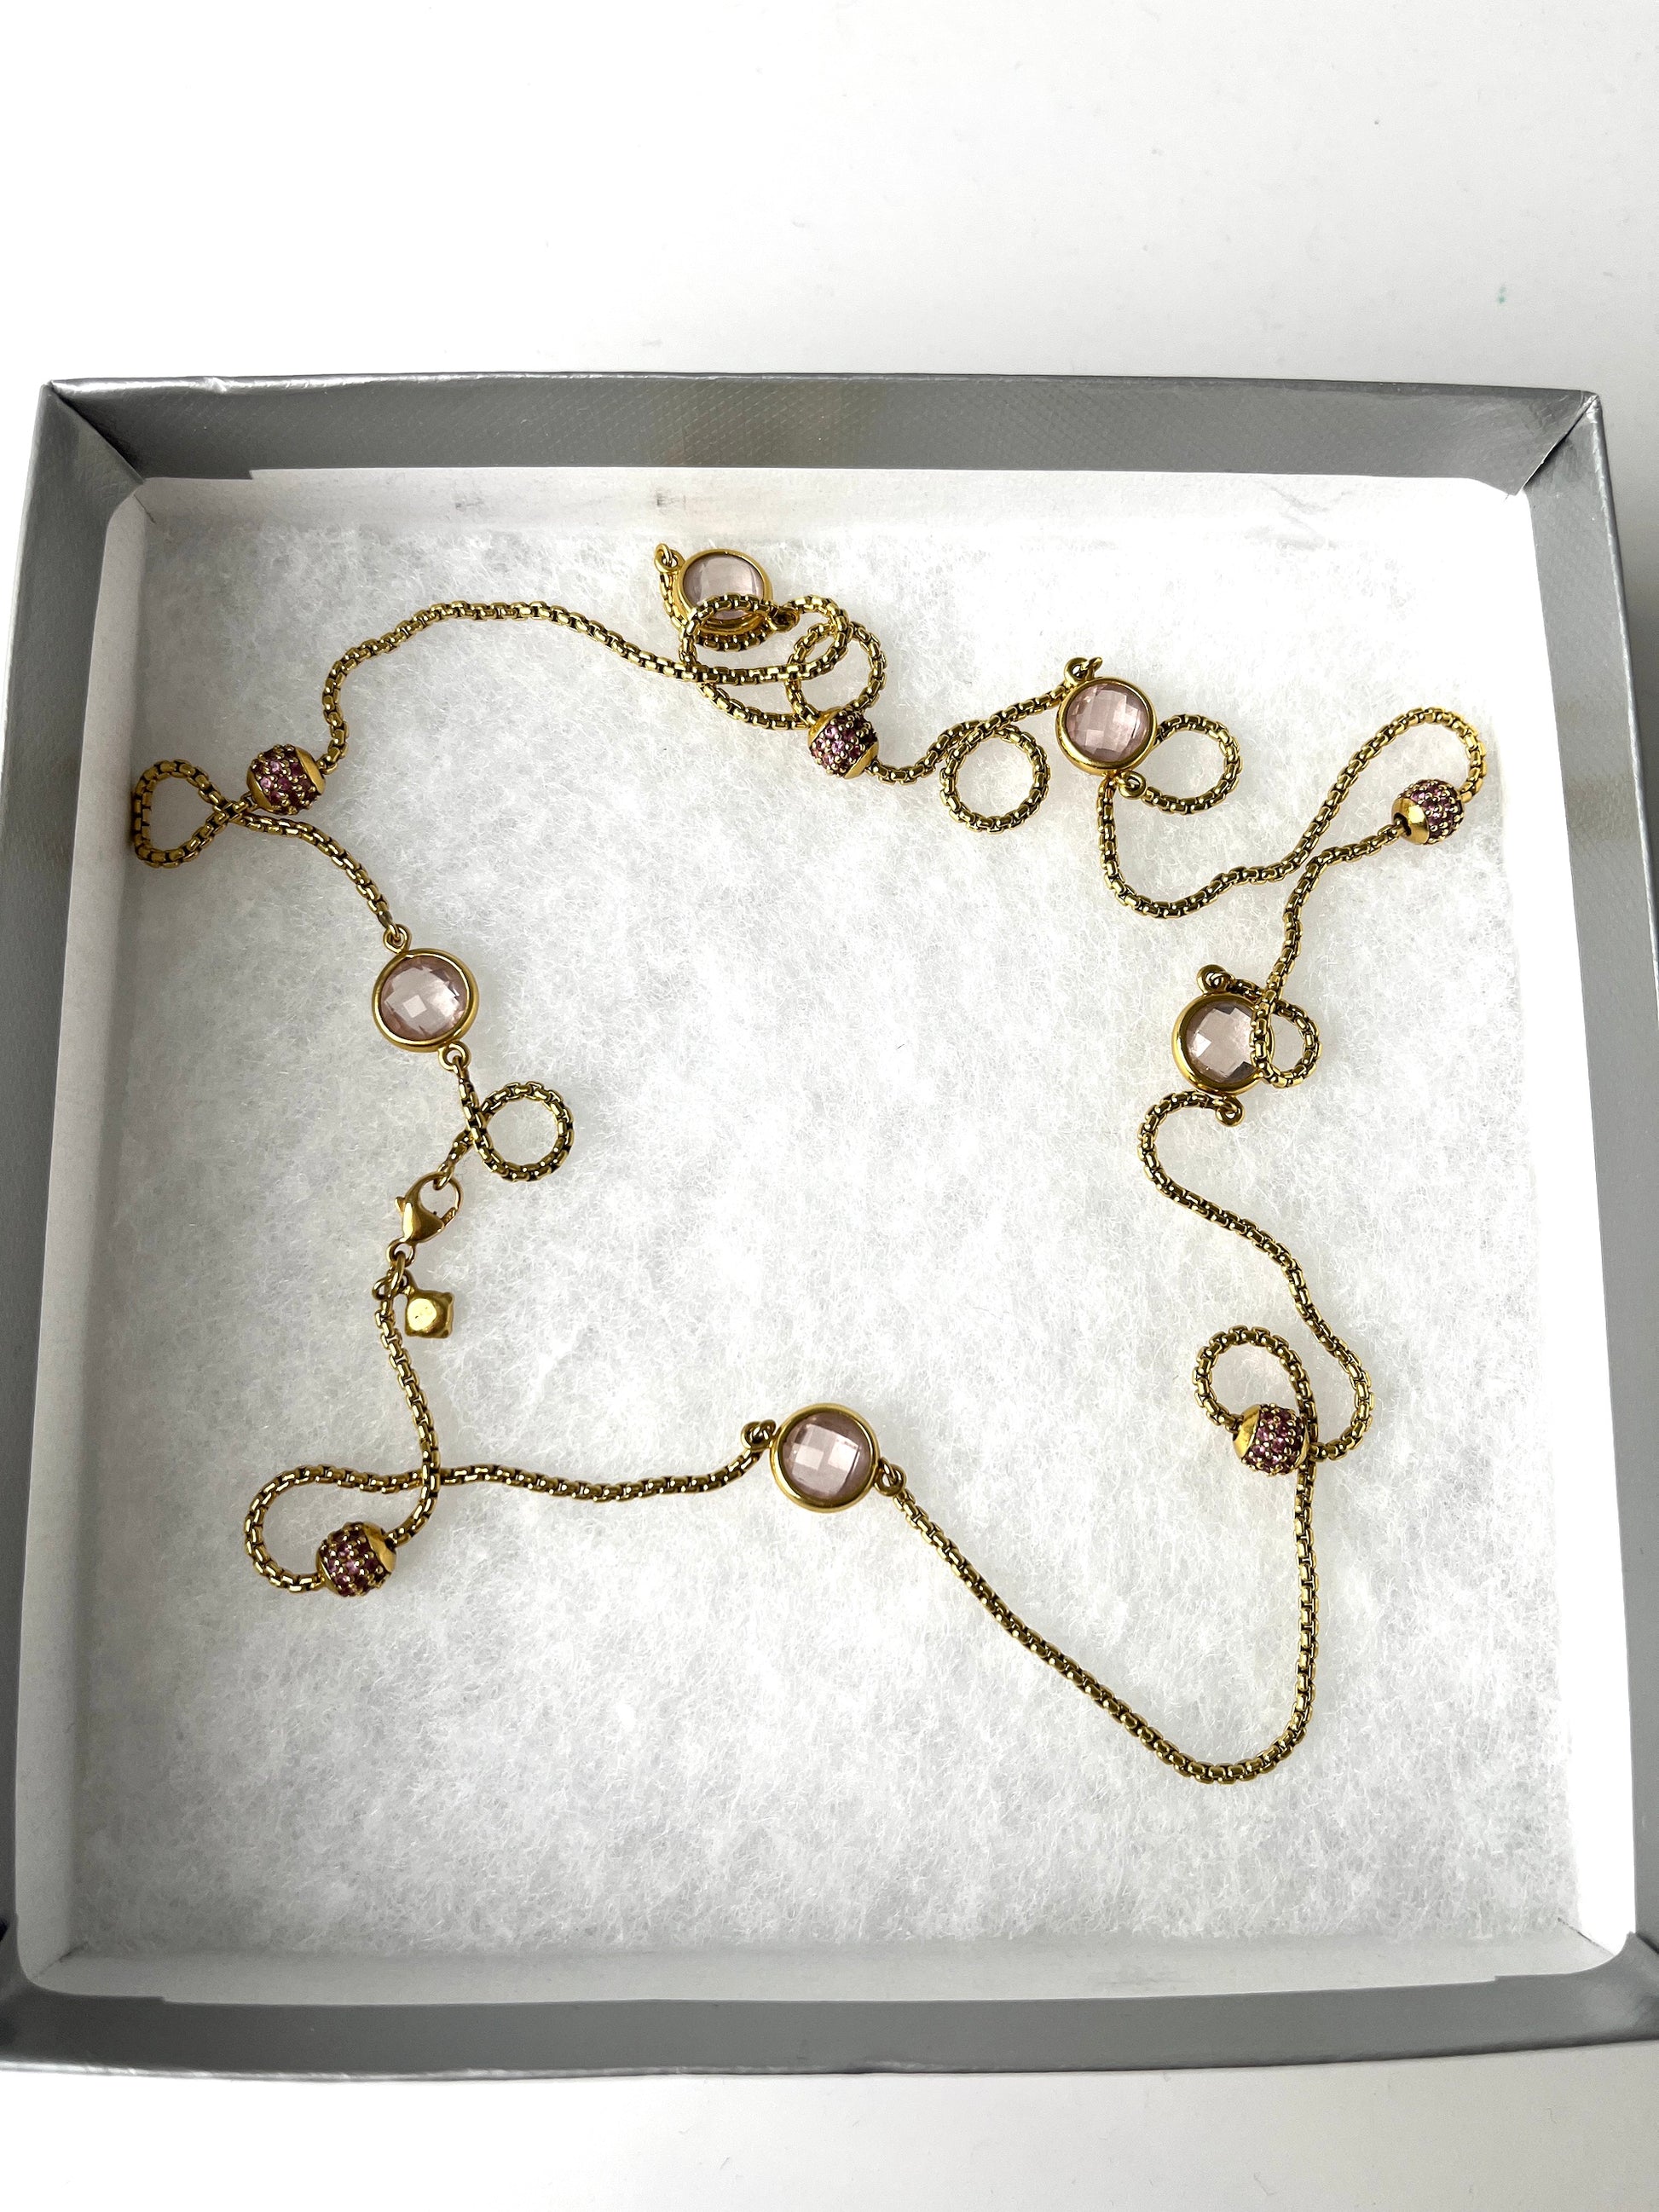 David Yurman 18k Gold Rose Quartz and Pink Sapphire Station Long Necklace